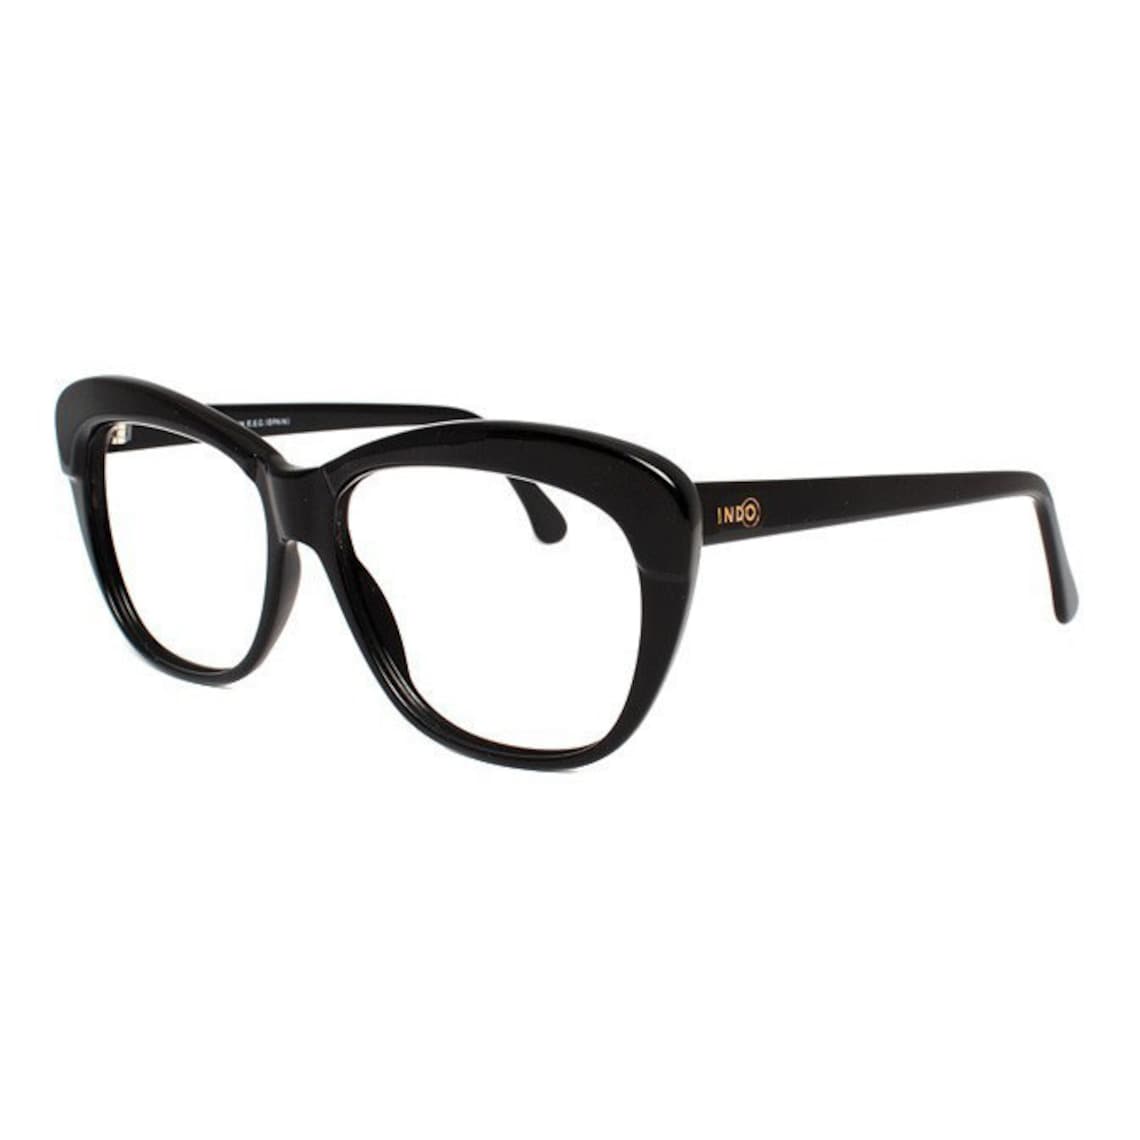 Vintage Black Glasses Frames Cateye Eyeglasses Fifties Style - Etsy